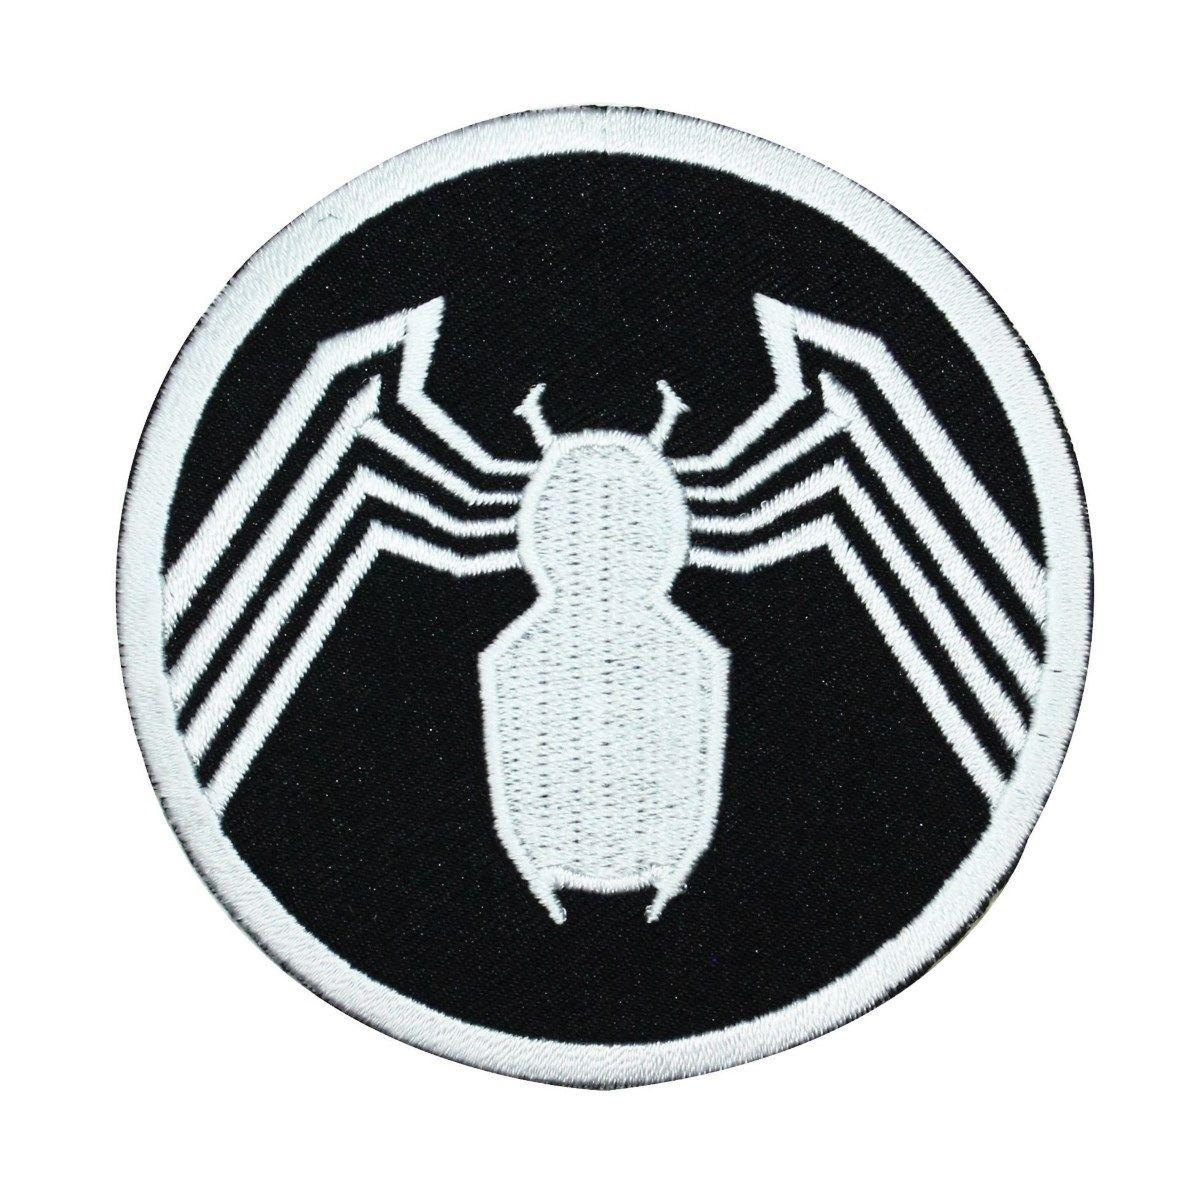 Spider-Man Venom Logo - Spider Man Venom Logo Patch Marvel Villain Badge Embroidered